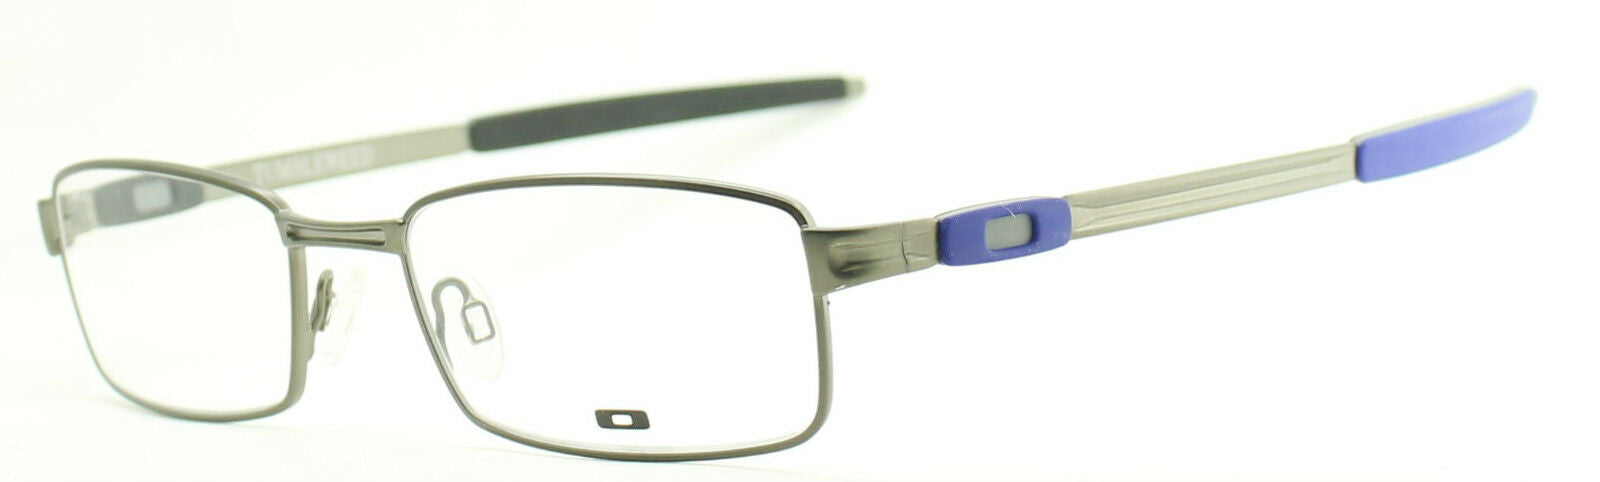 OAKLEY TUMBLEWEED OX3112-0453 Eyewear FRAMES RX Optical Eyeglasses Glasses - New